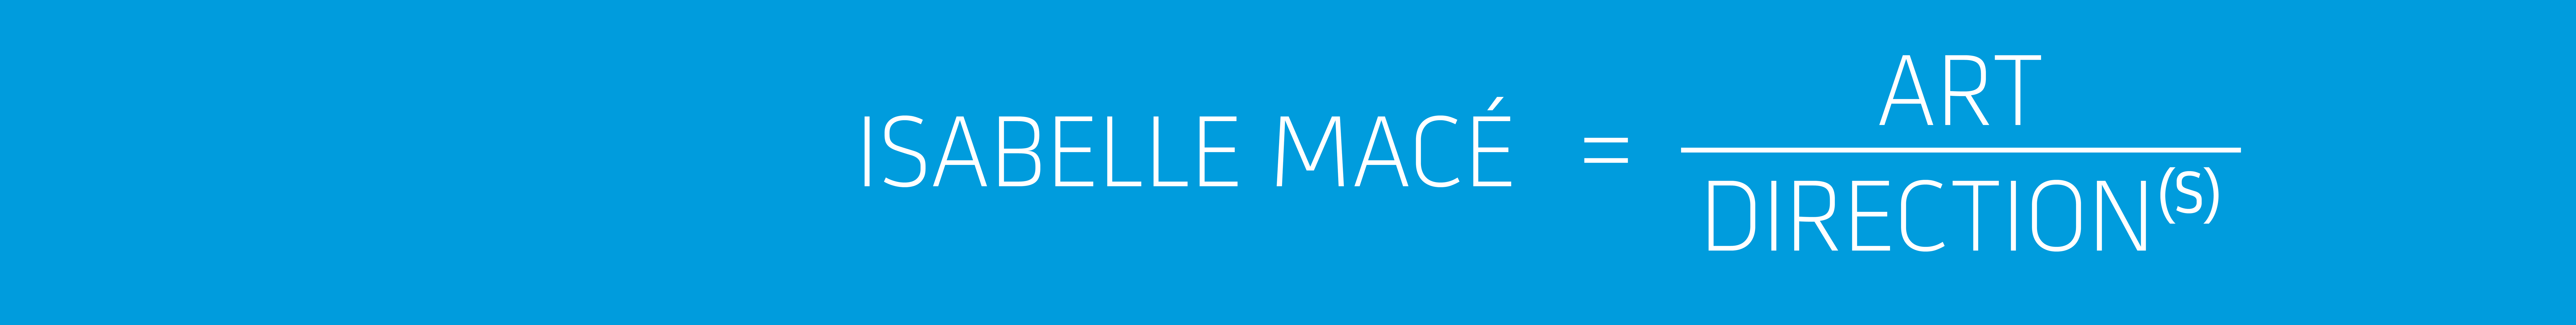 Isabelle Macés profilbanner